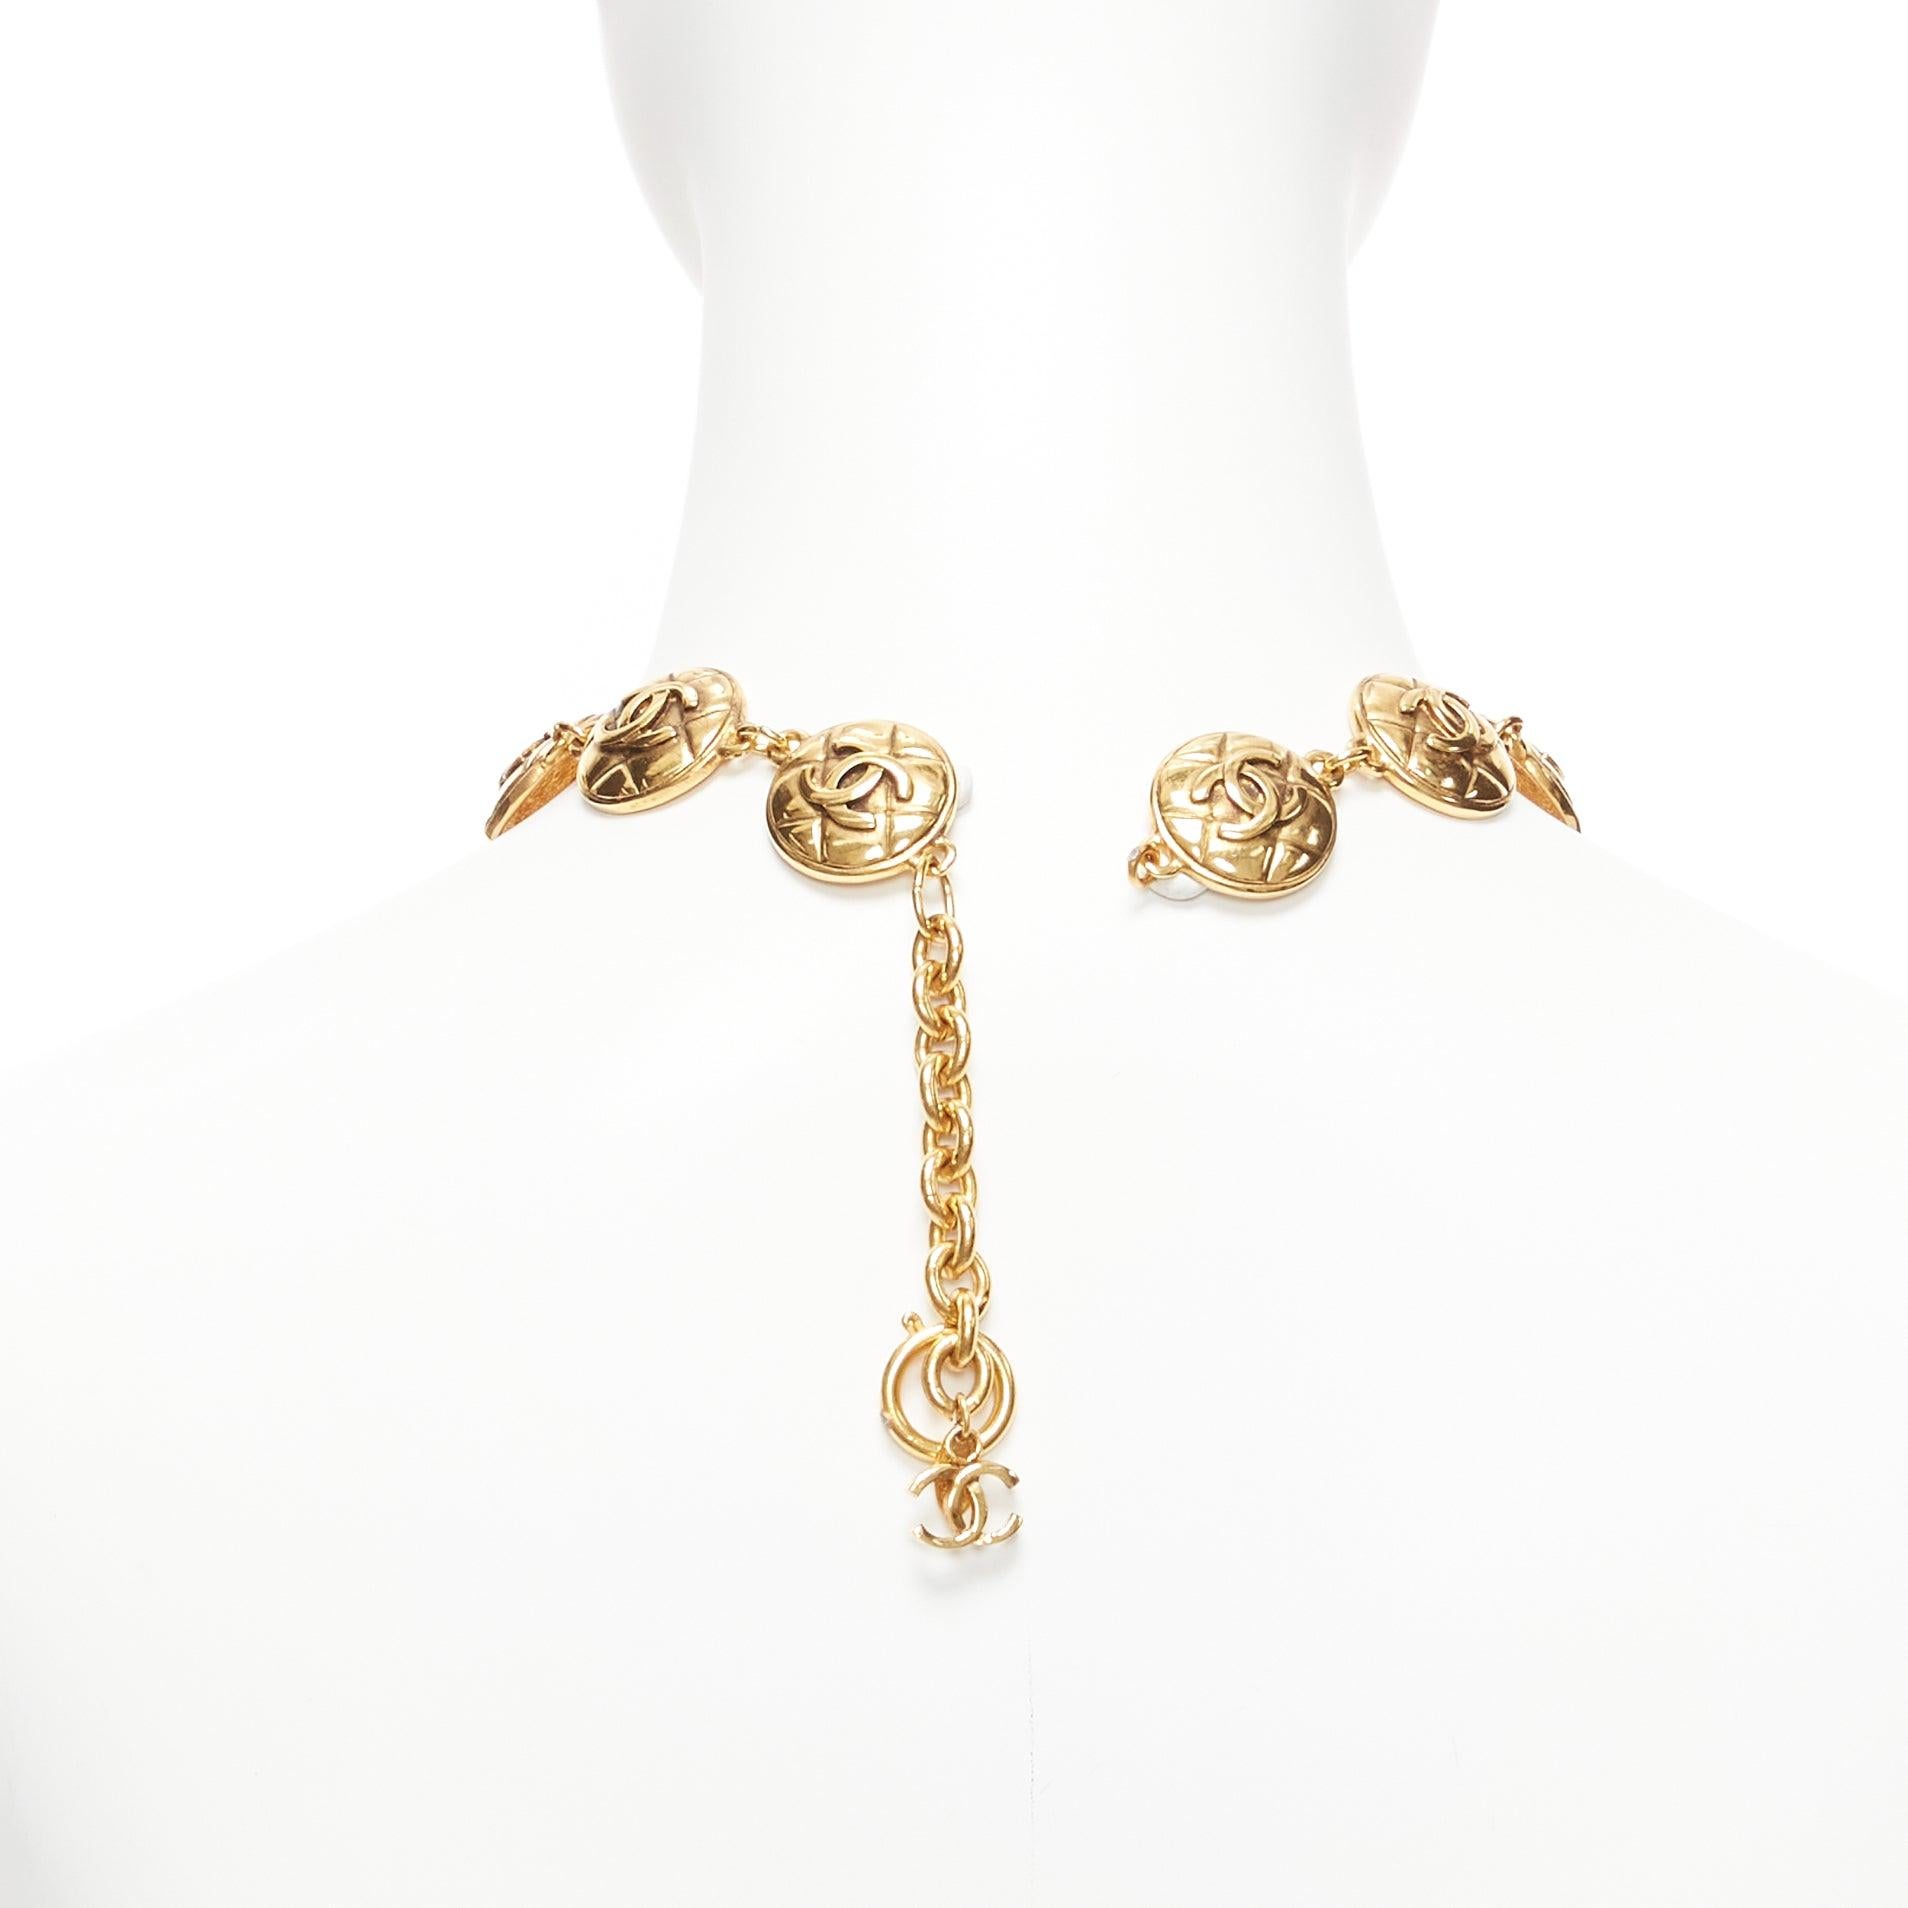 CHANEL Vintage gold CC diamond matelasse coin charm choker necklace For Sale 1